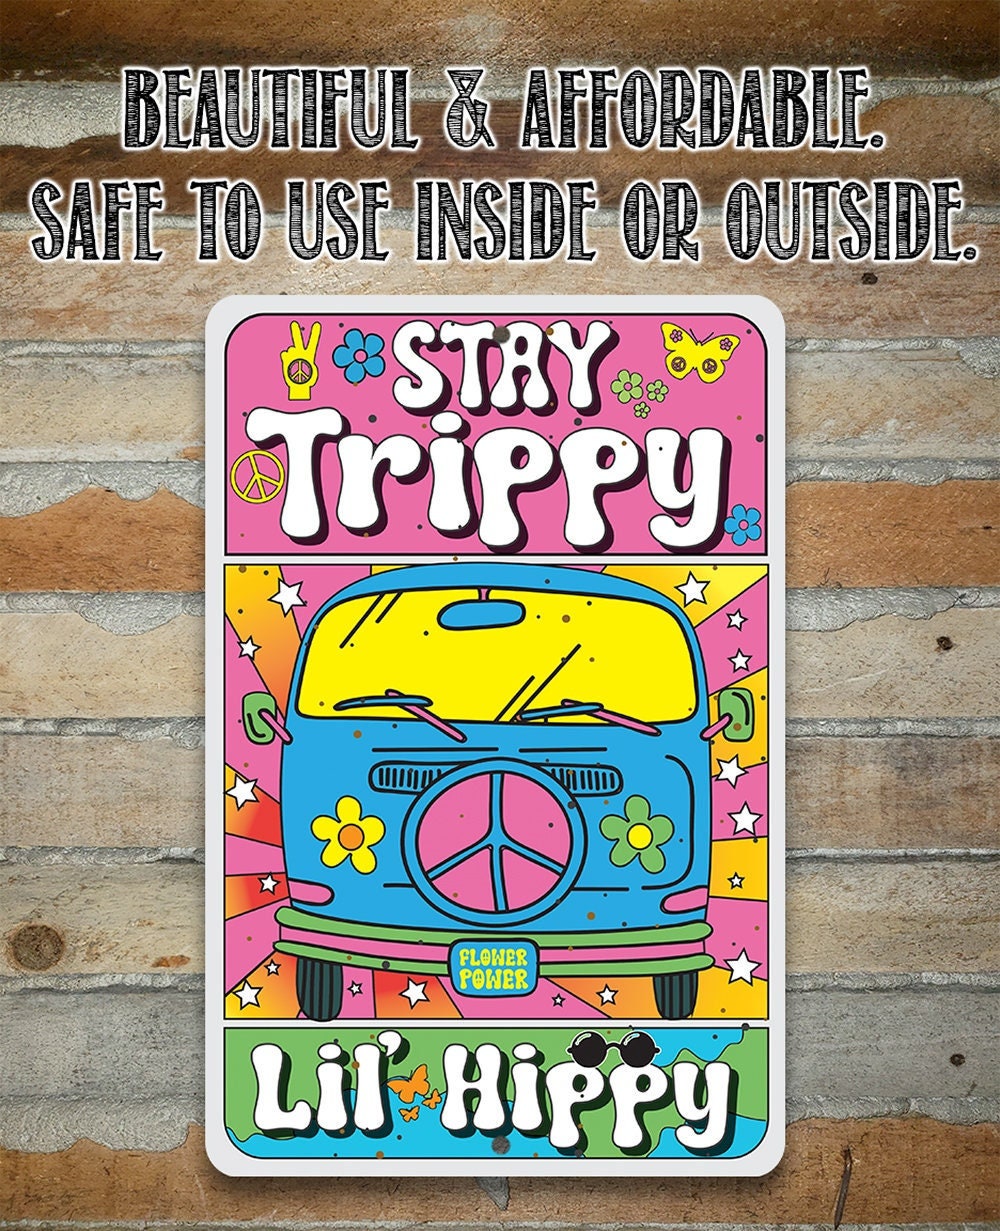 Stay Trippy Lil' Hippy - Metal Sign Metal Sign Lone Star Art 